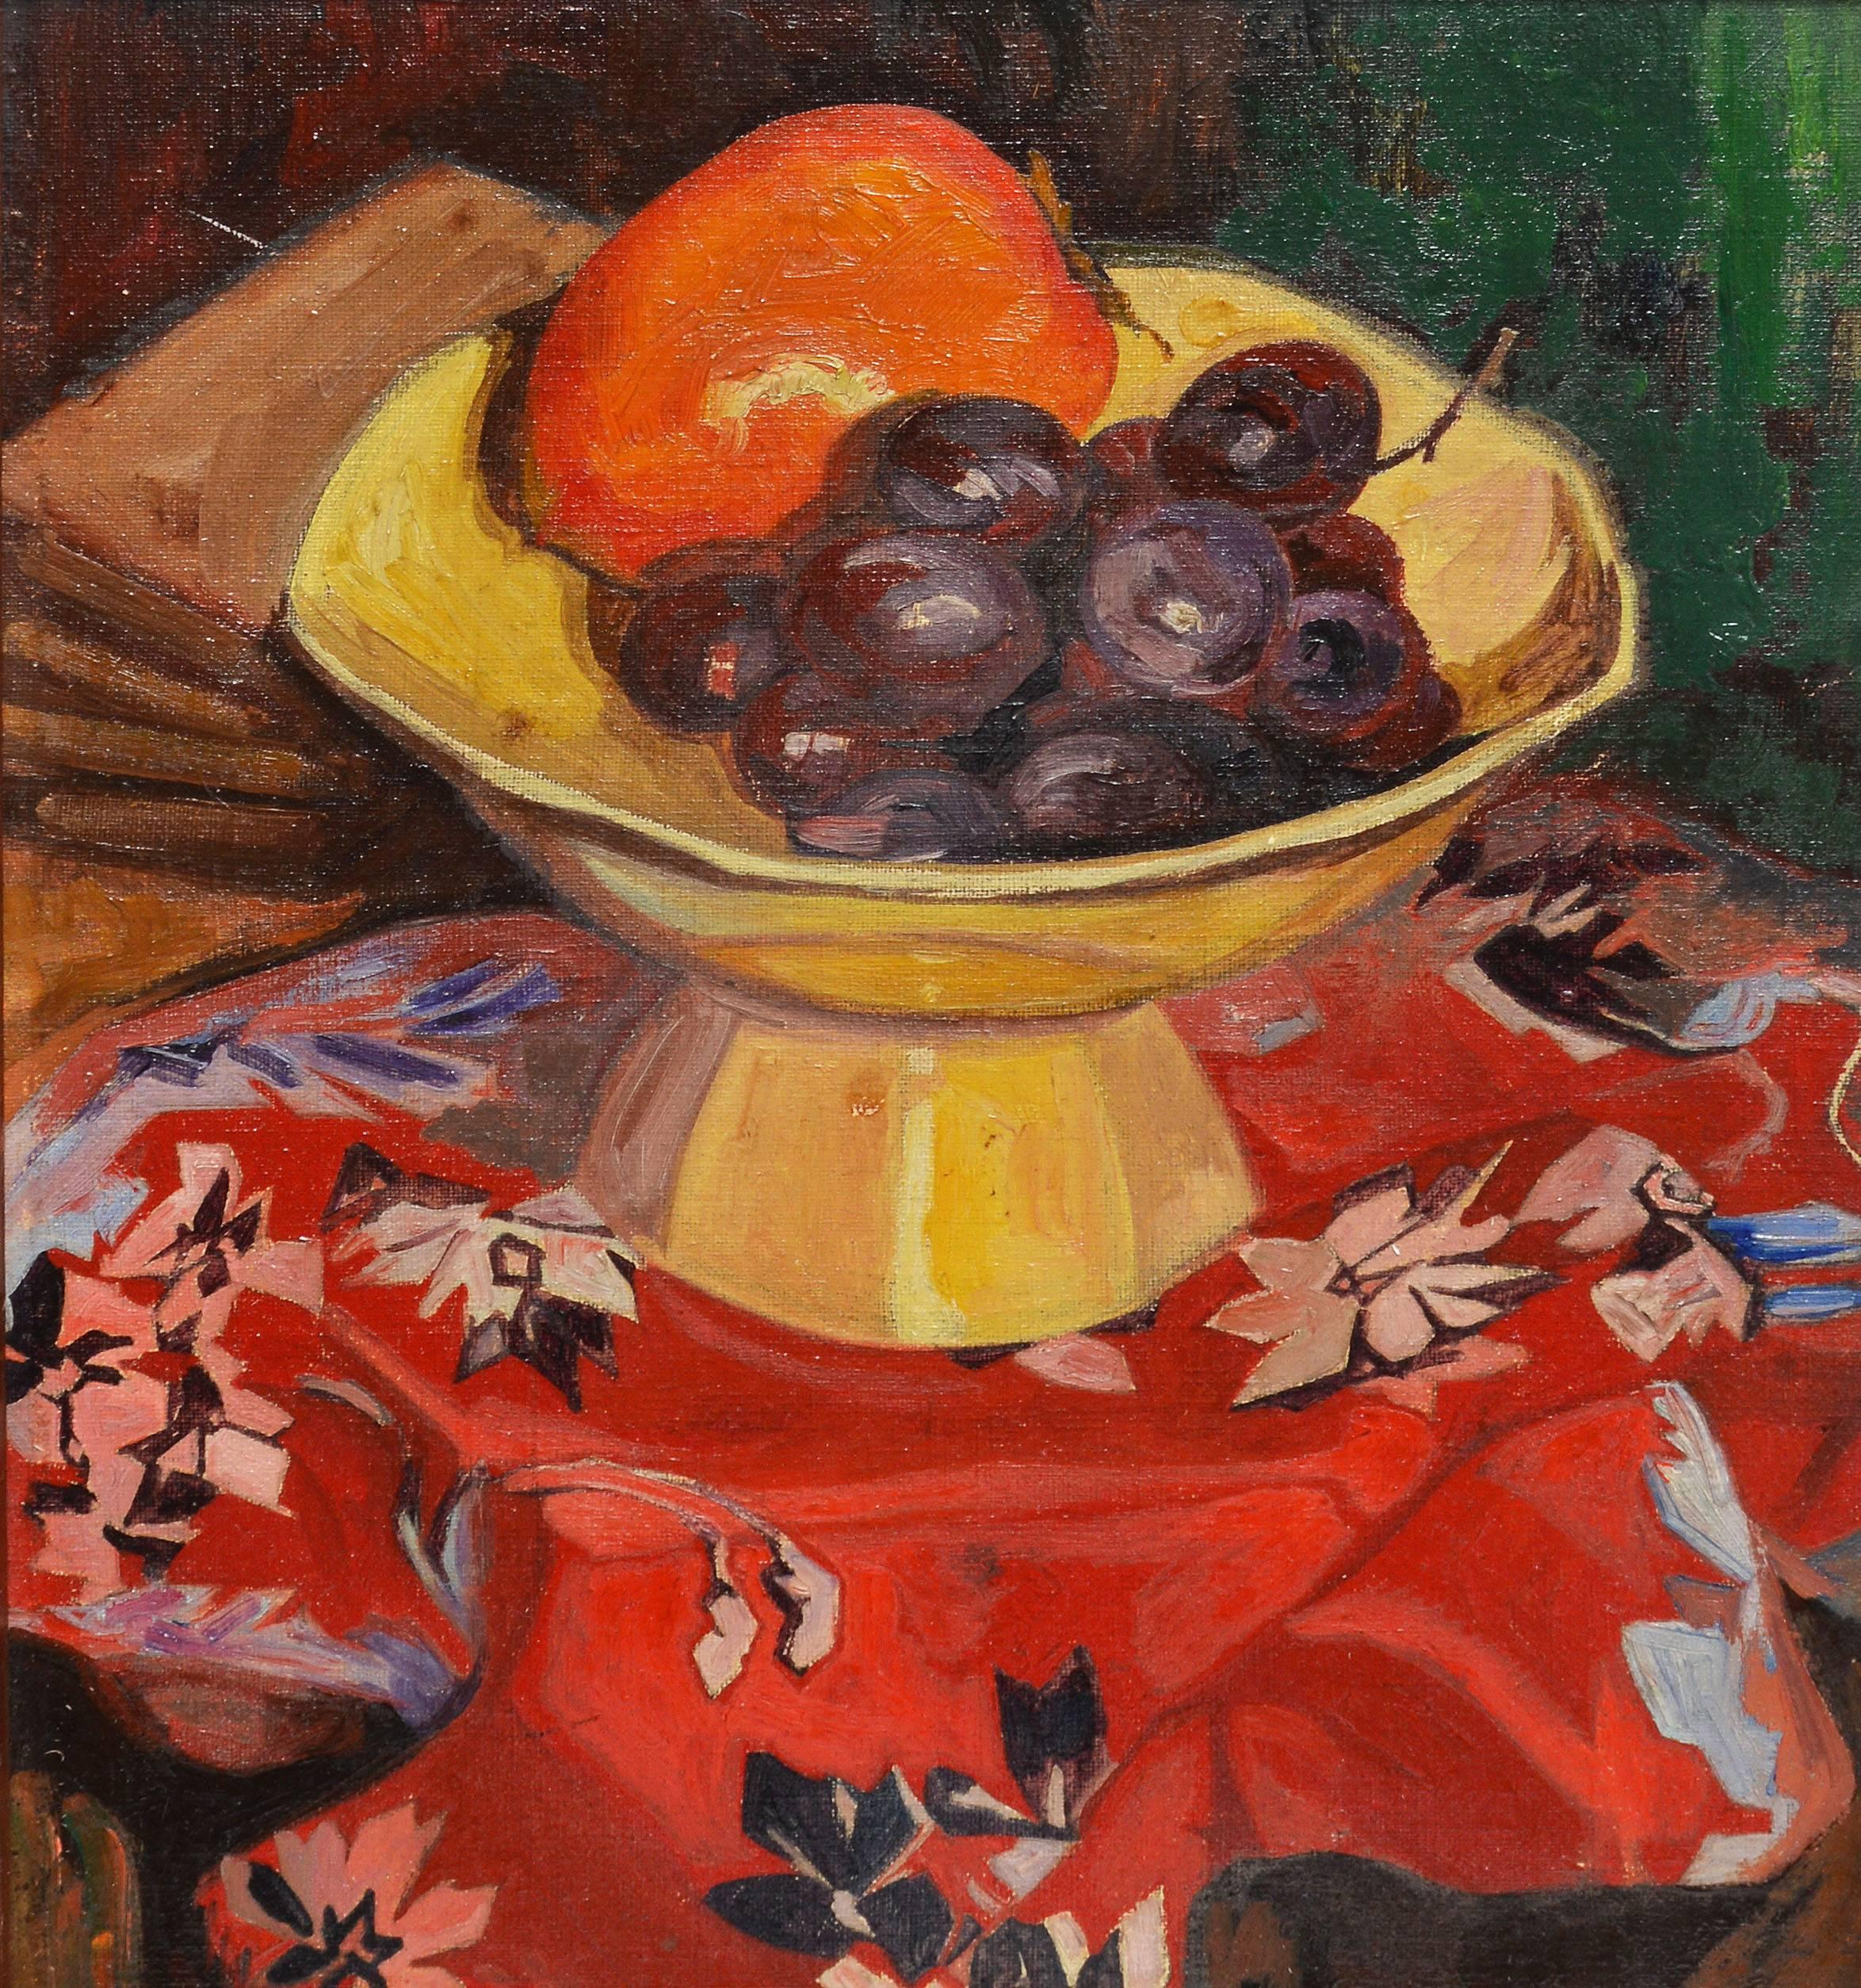 Modernist fruit still life by Saul Raskin (1878-1966).  Oil on board, circa 1930.  Signed lower left, 